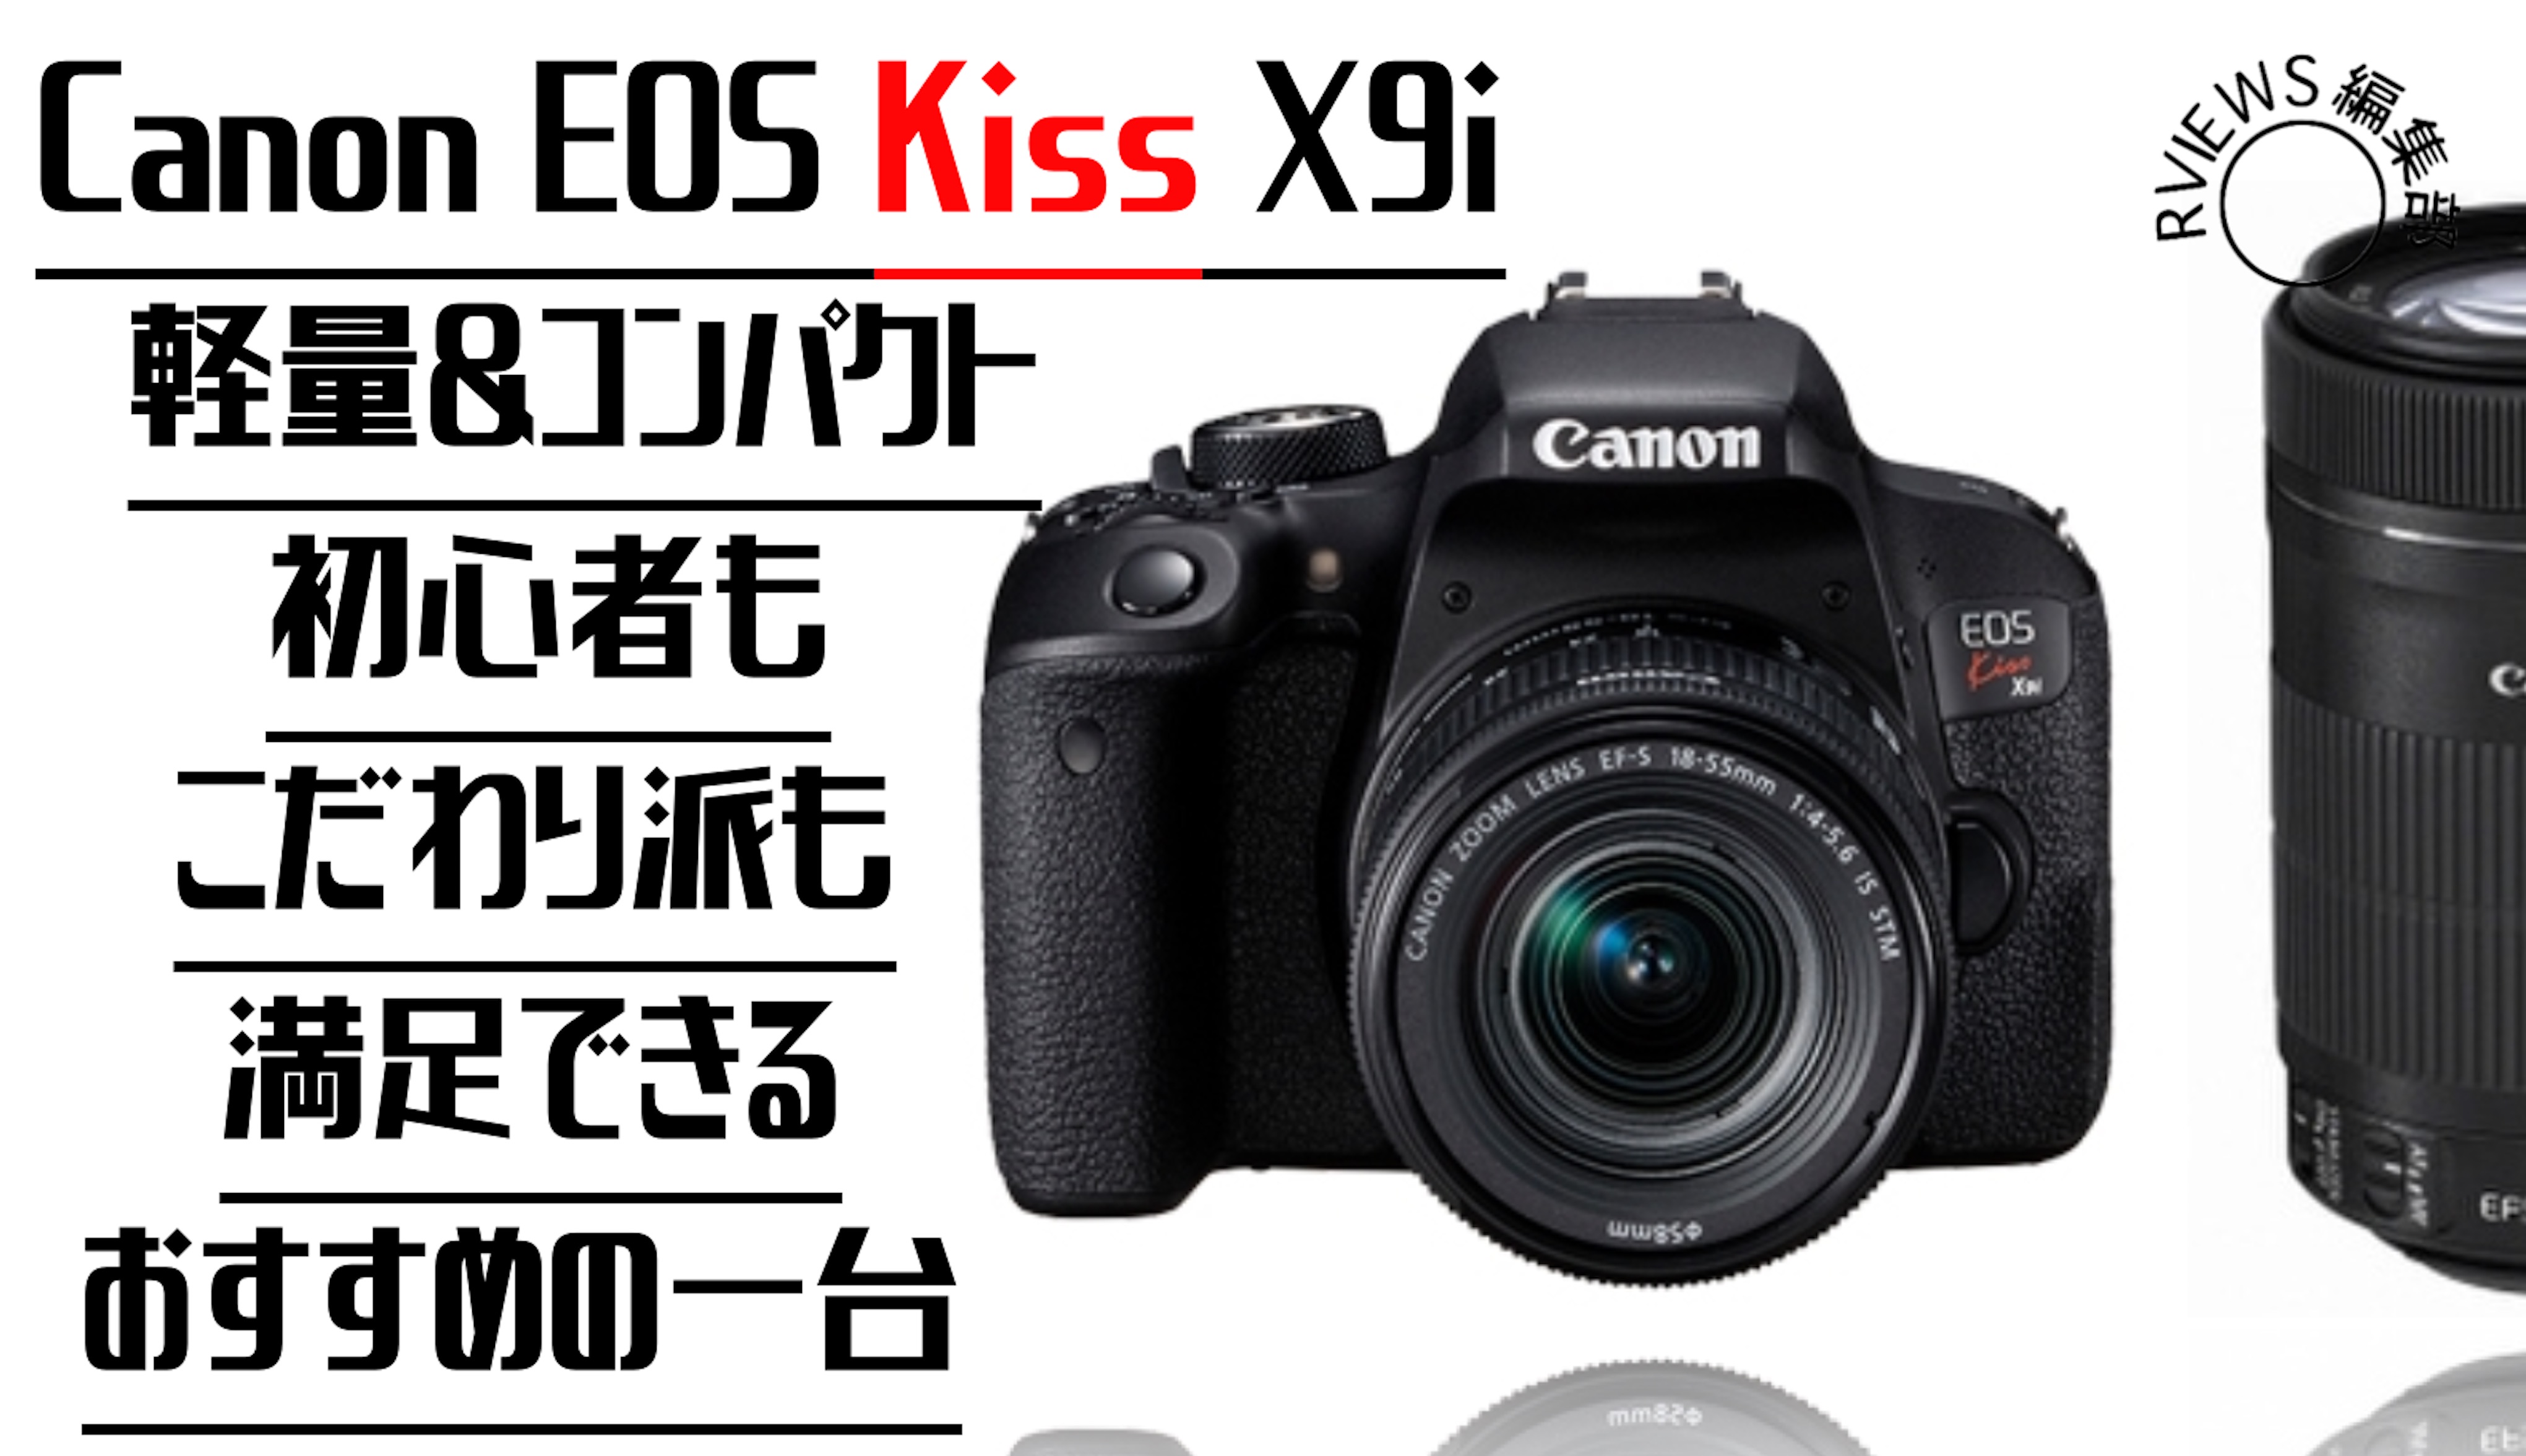 Canon EOS Kiss X9i